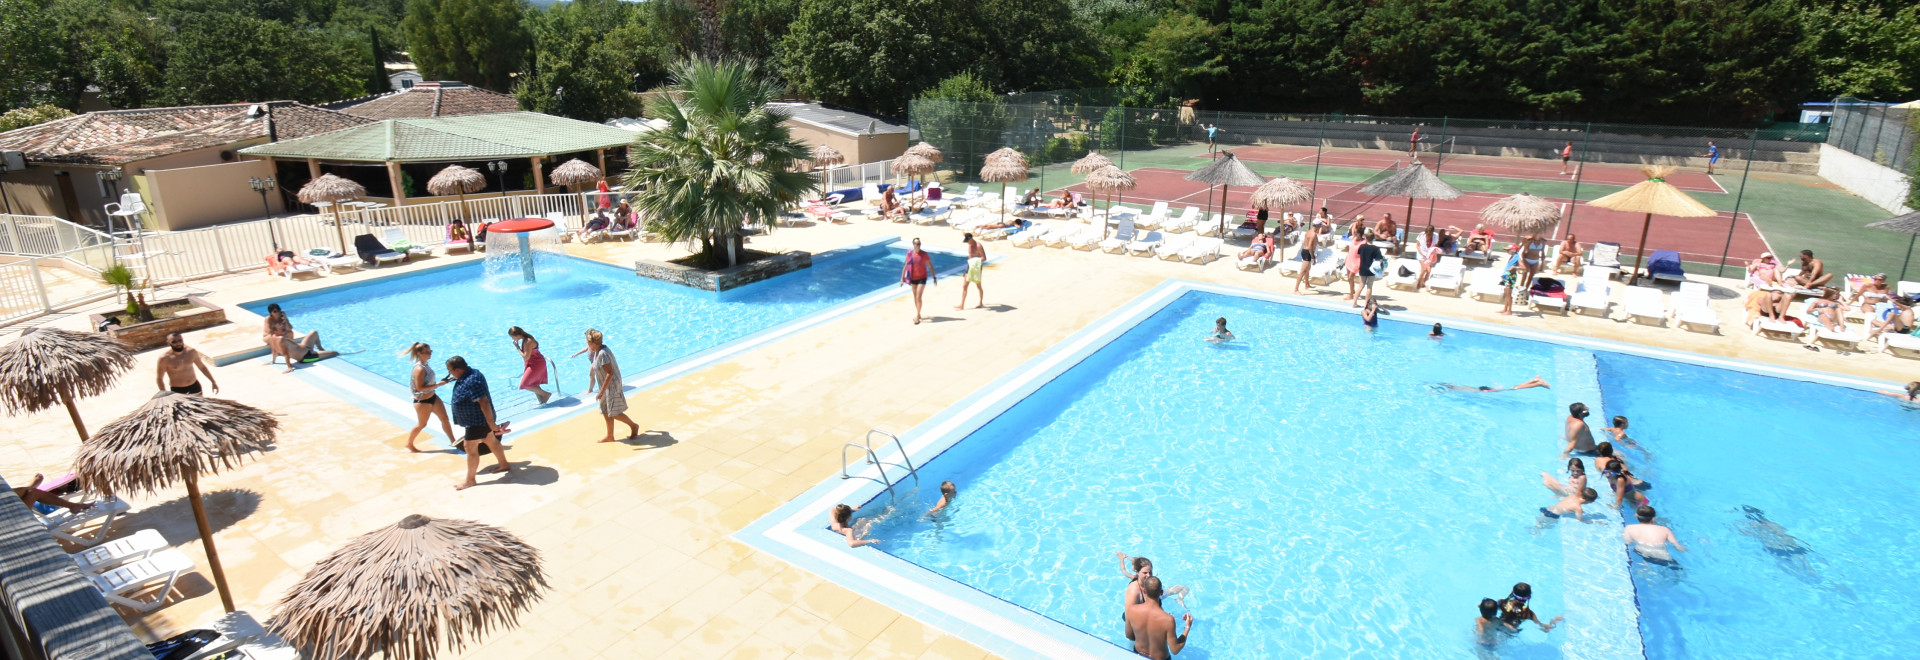 Camping Var avec piscine - Sunêlia Vacances 3.JPG